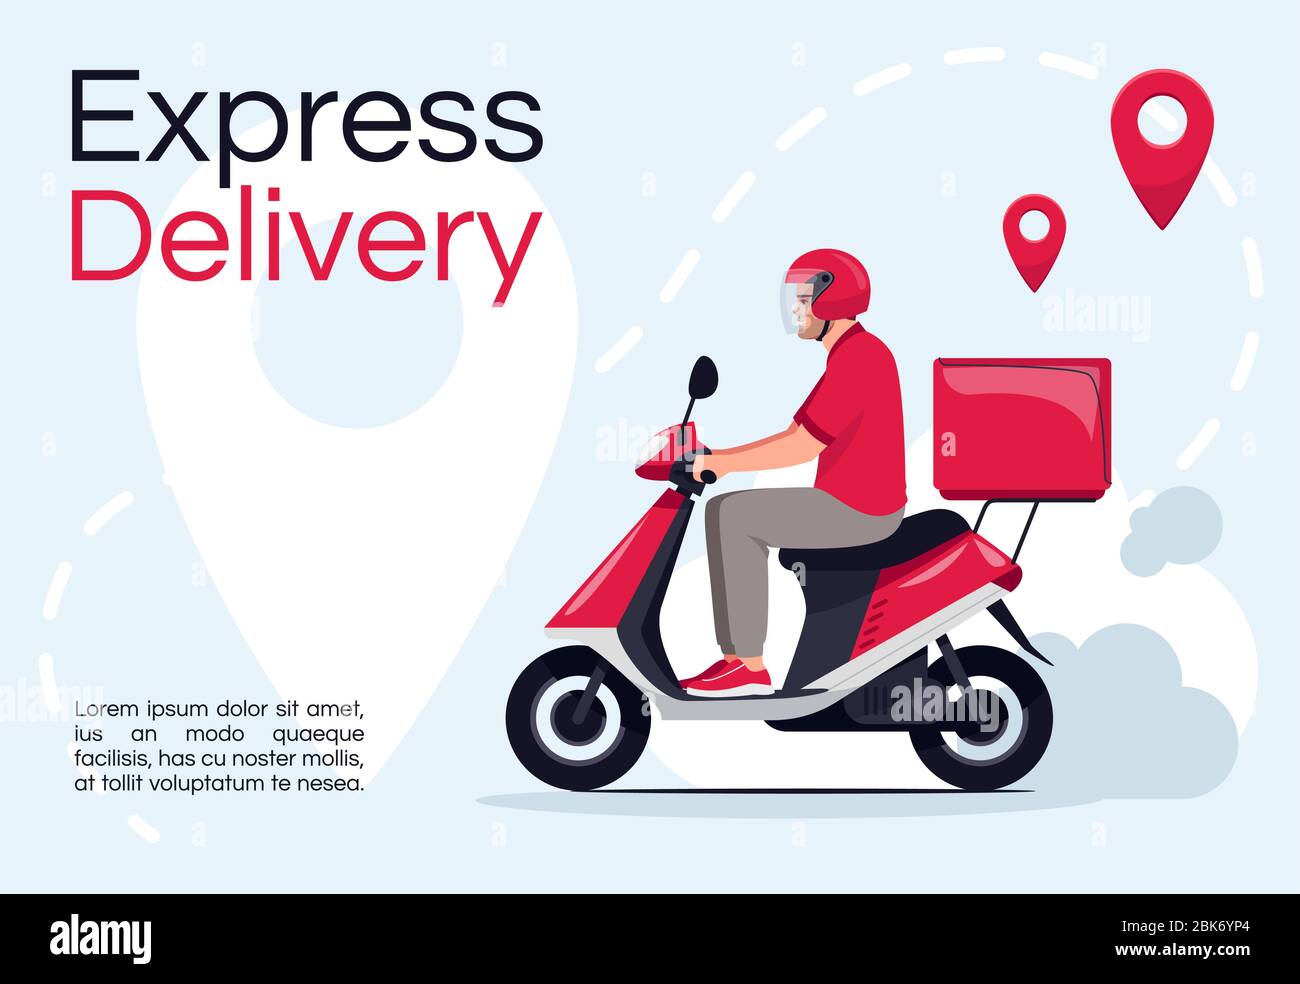 Vorlage für Express Delivery Poster Stock-Vektorgrafik - Alamy With Regard To Delivery Flyer Template